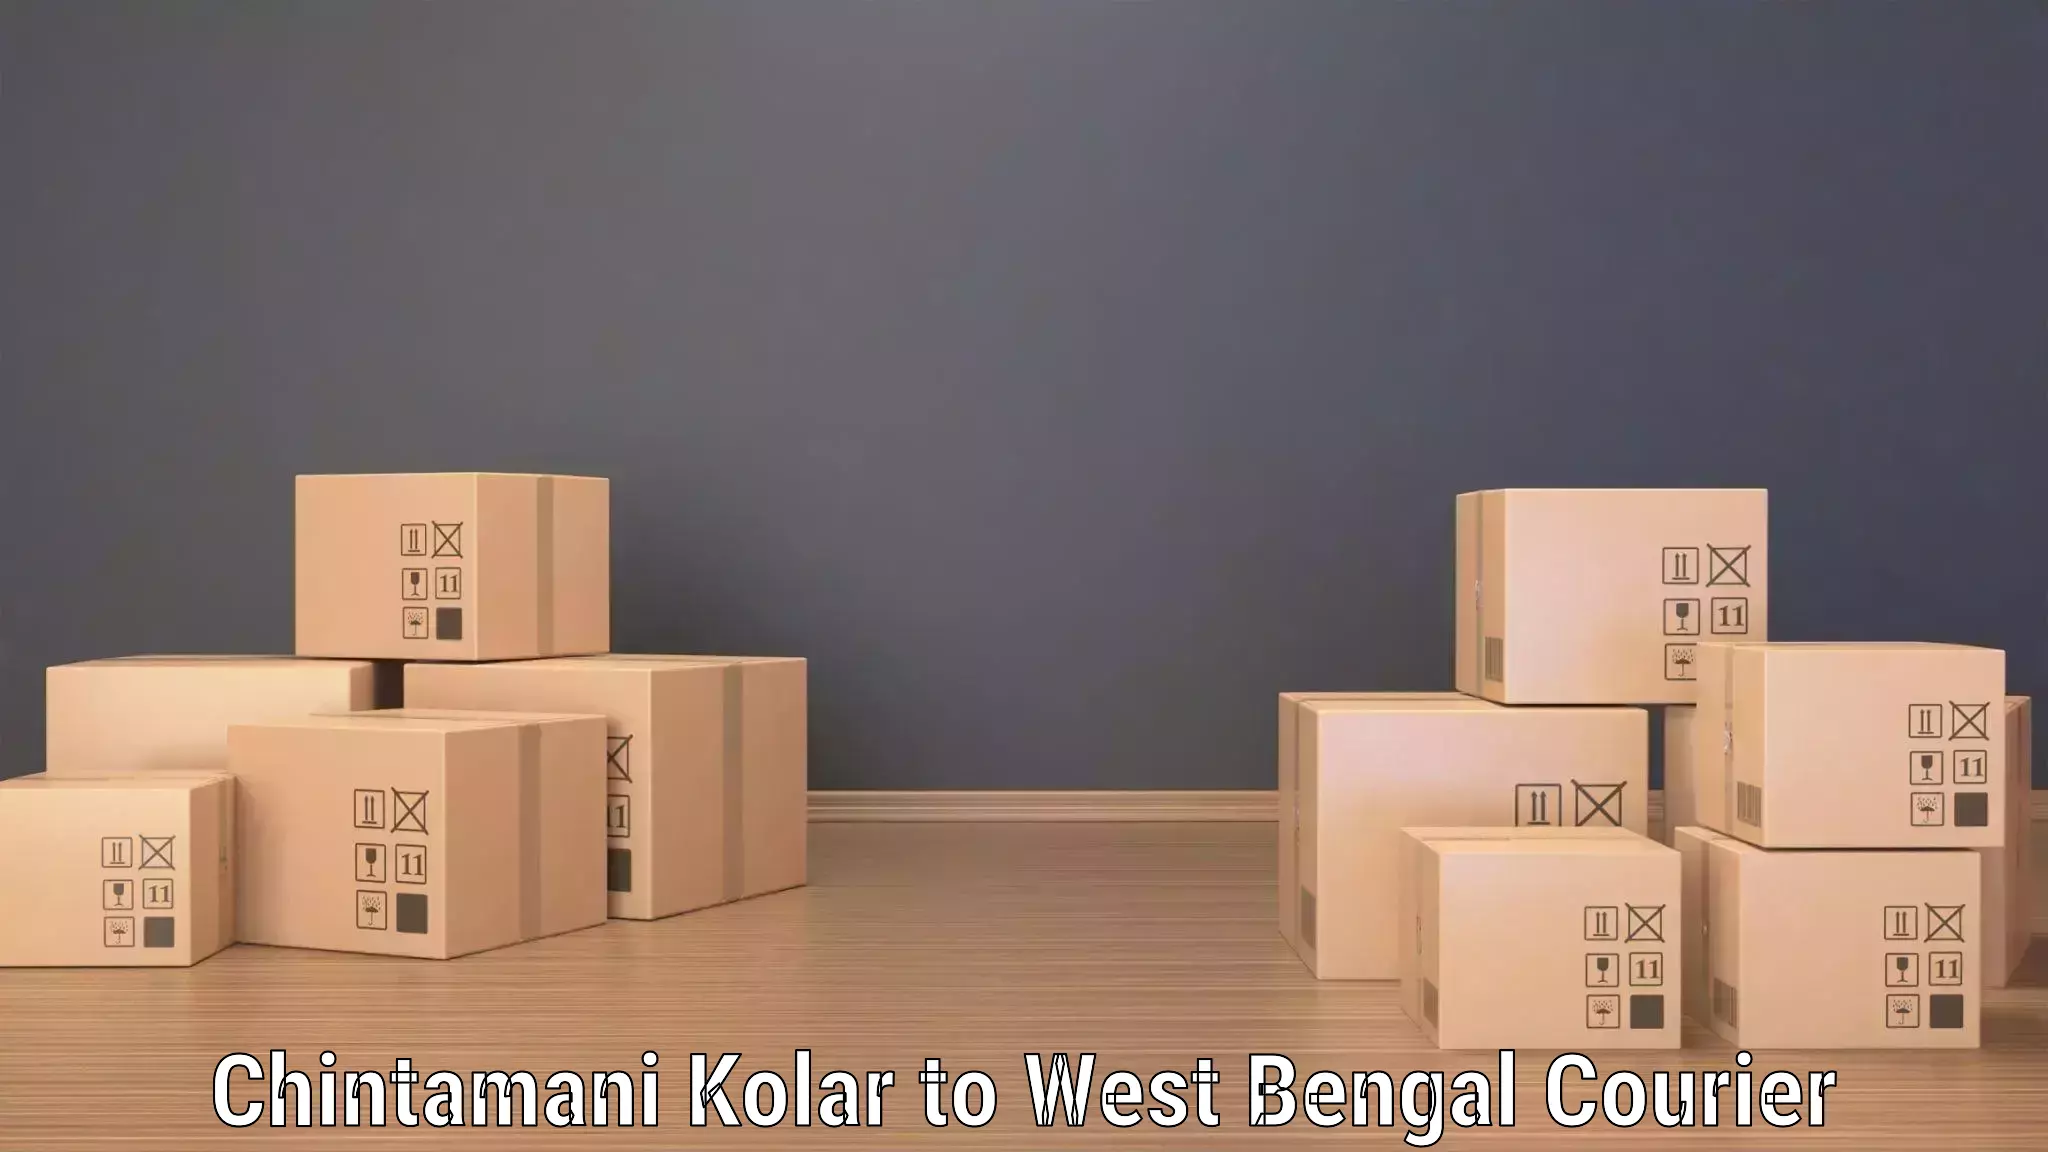 Express mail solutions Chintamani Kolar to Helencha